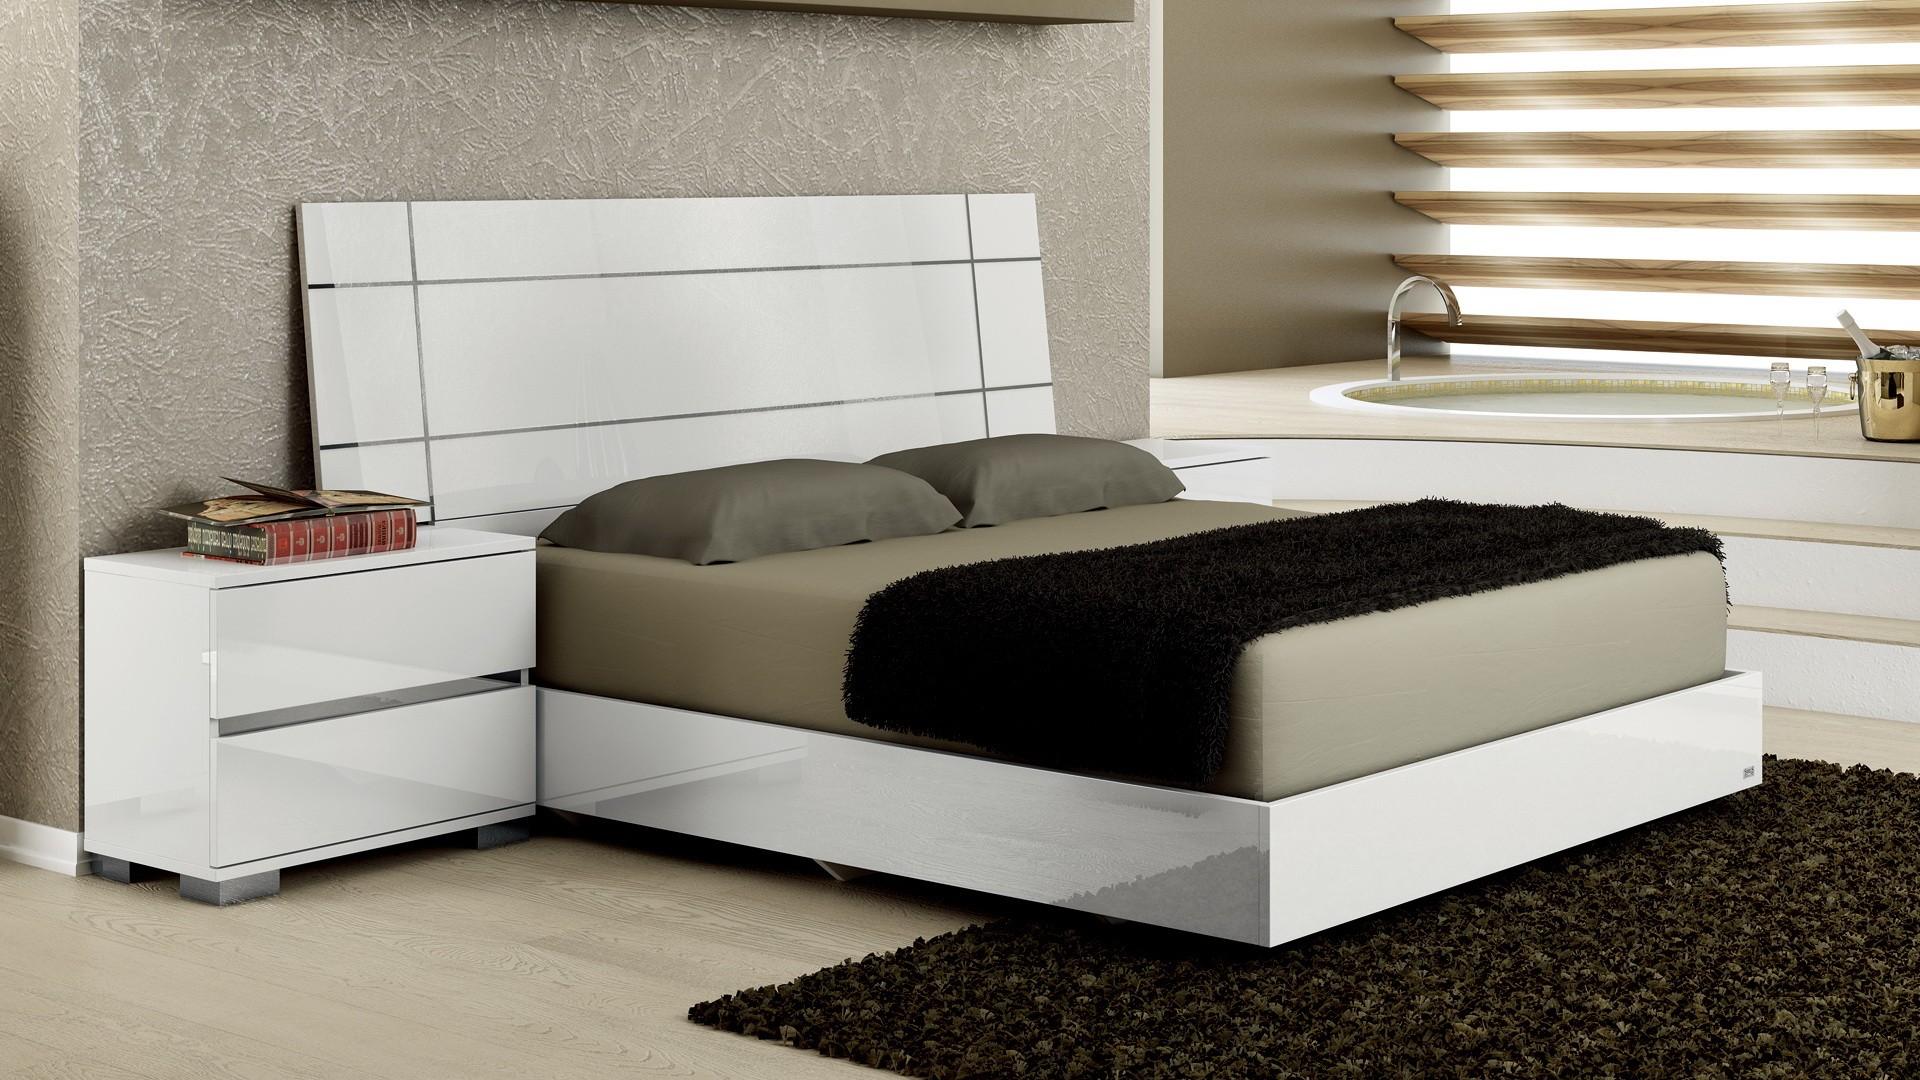 At Home USA Dream Platform Bedroom Set